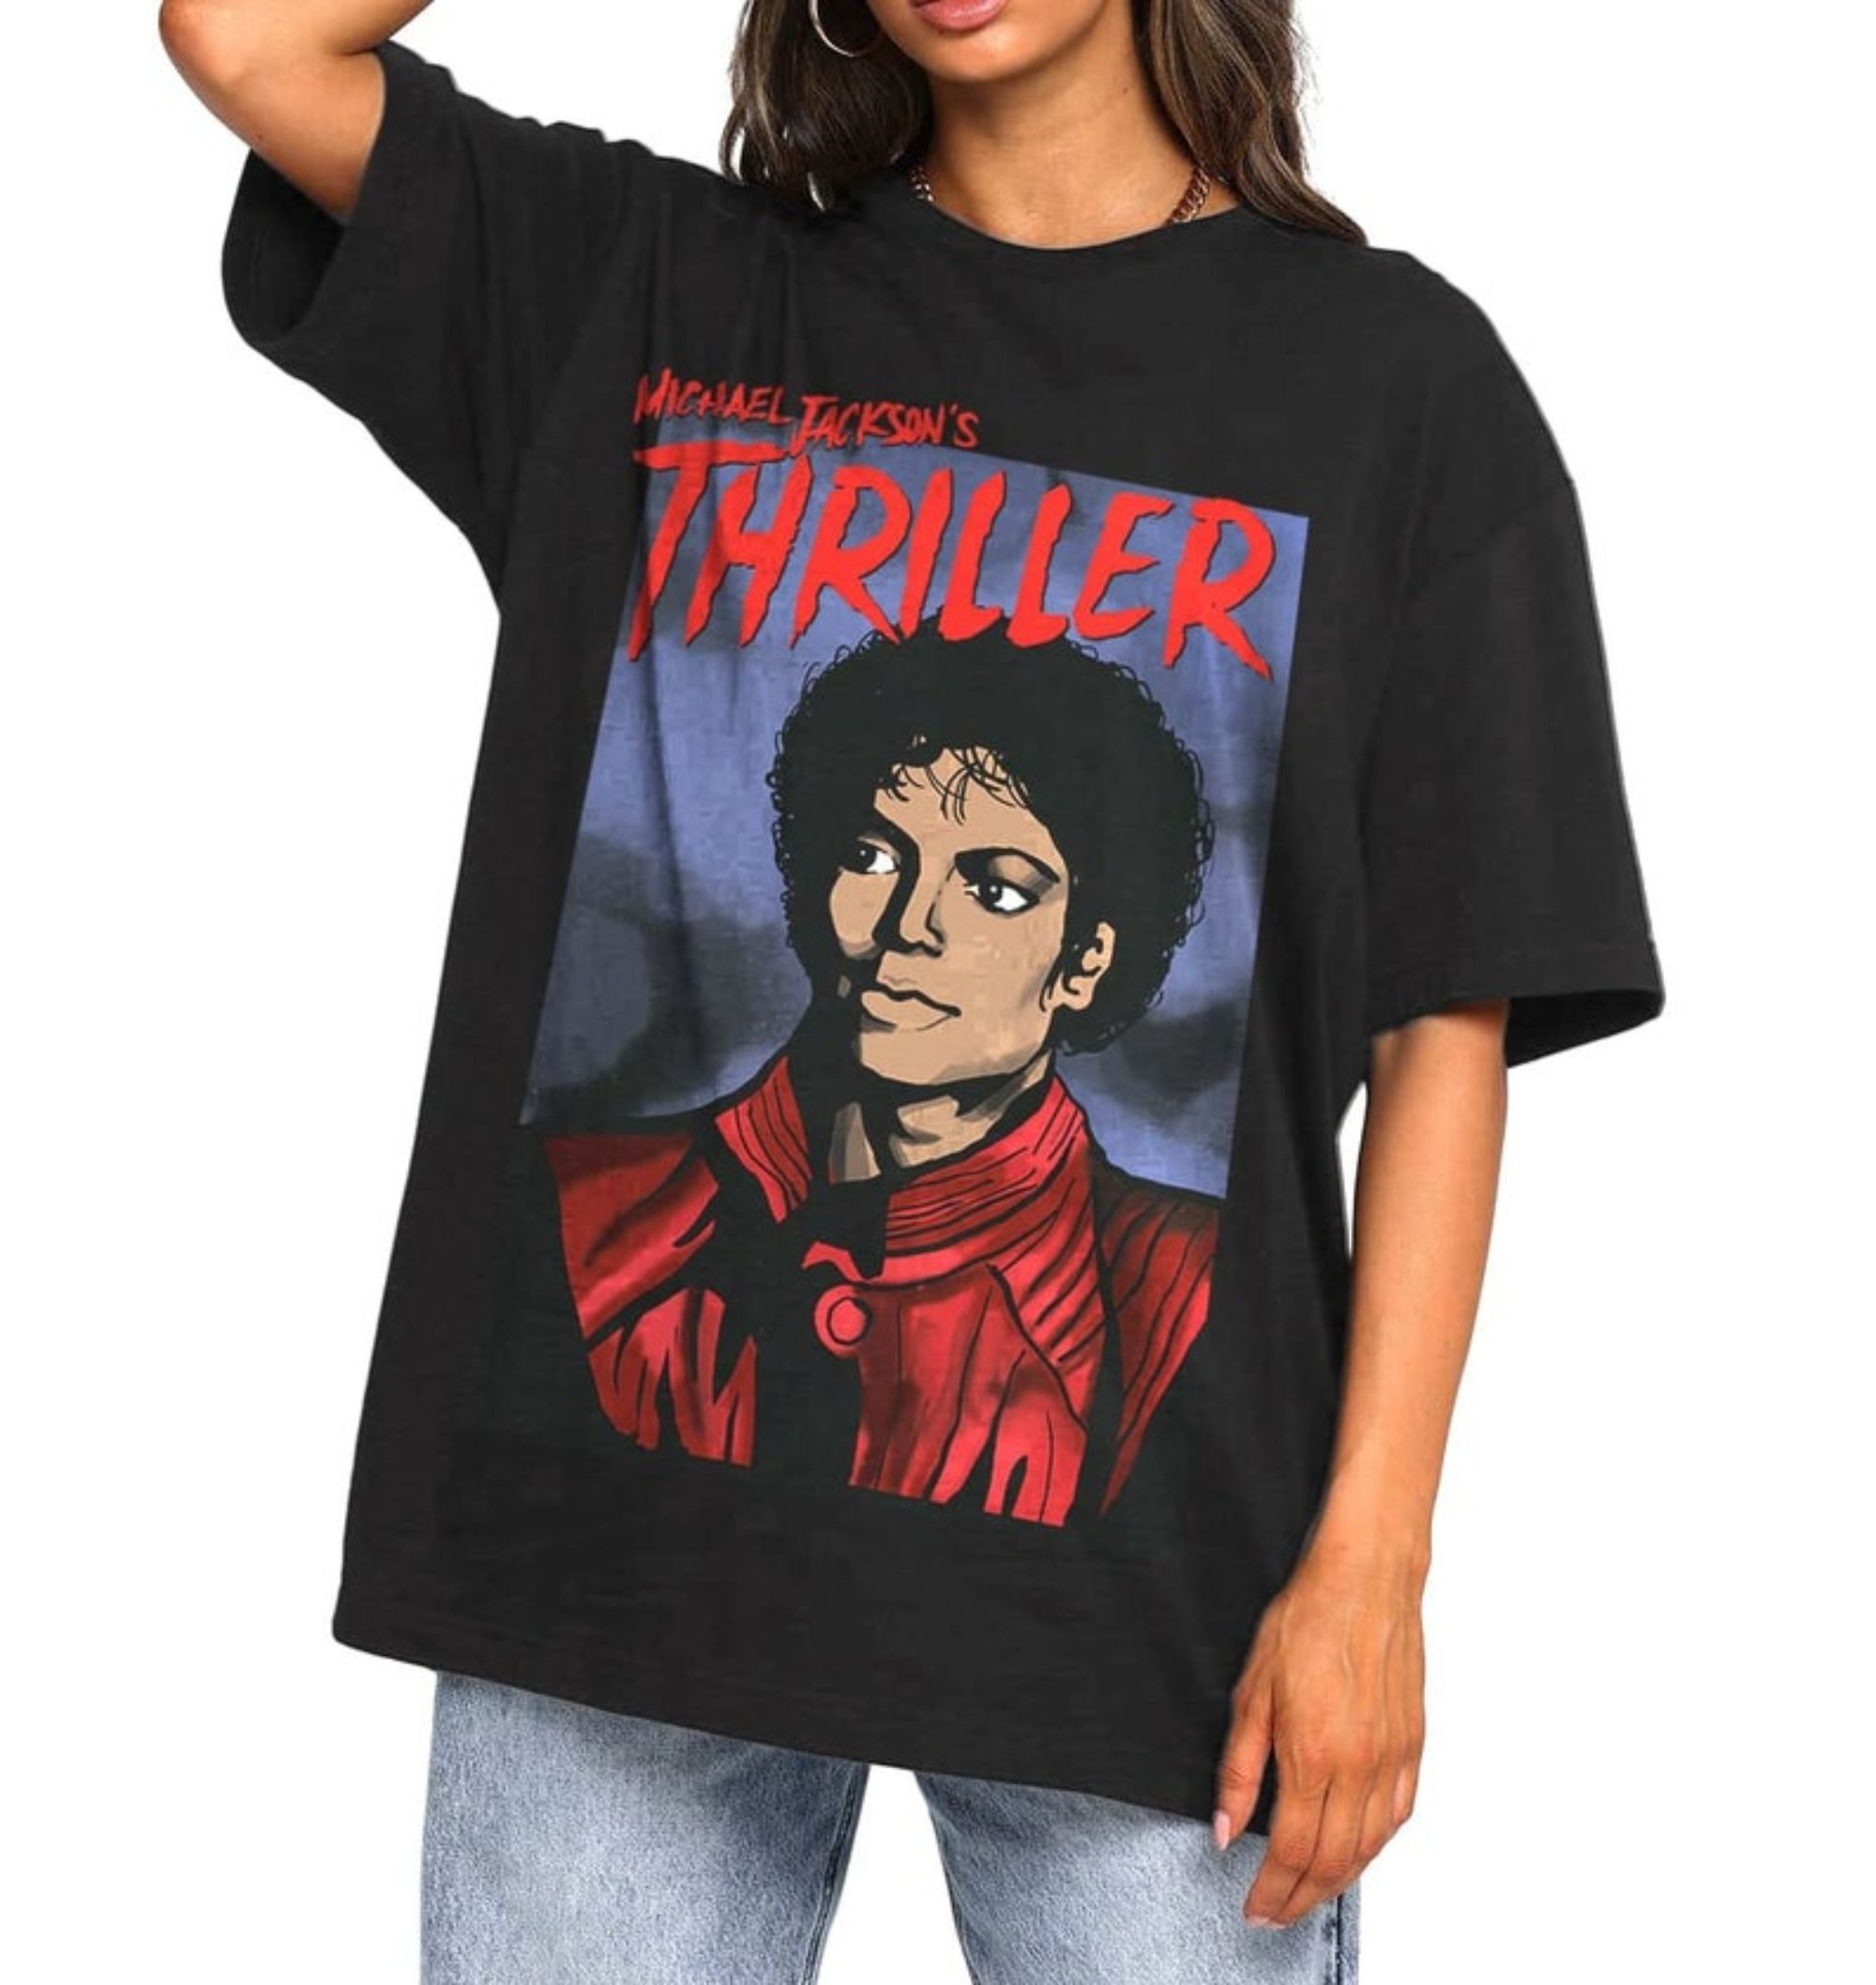 King Of Pop Michael Jackson shirt, Michael Jackson Thriller Shirt